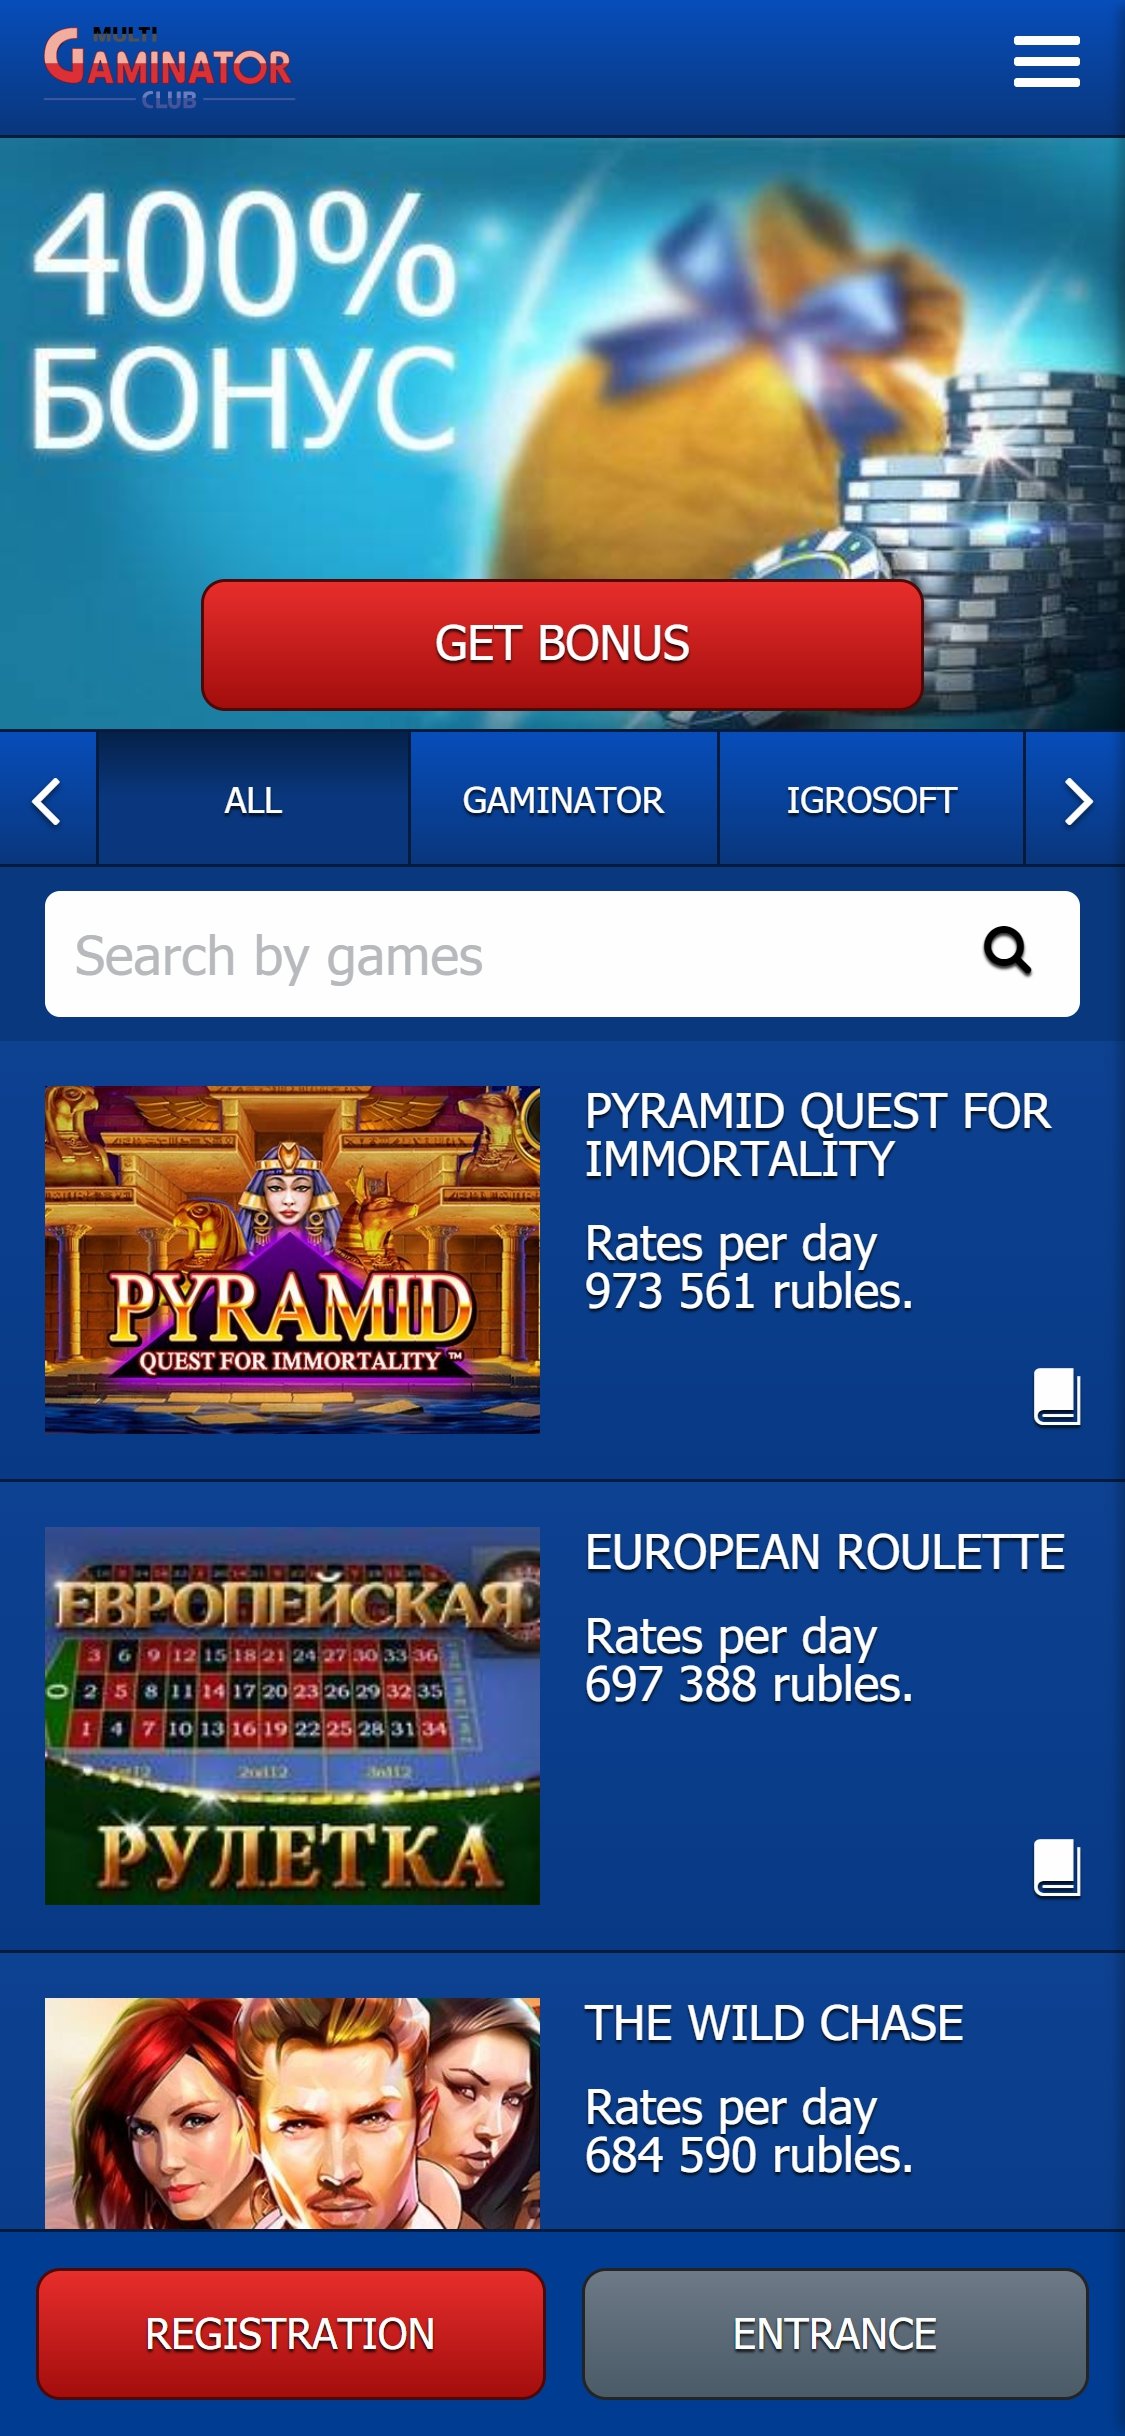 Online Gaminator Casino Mobile Review